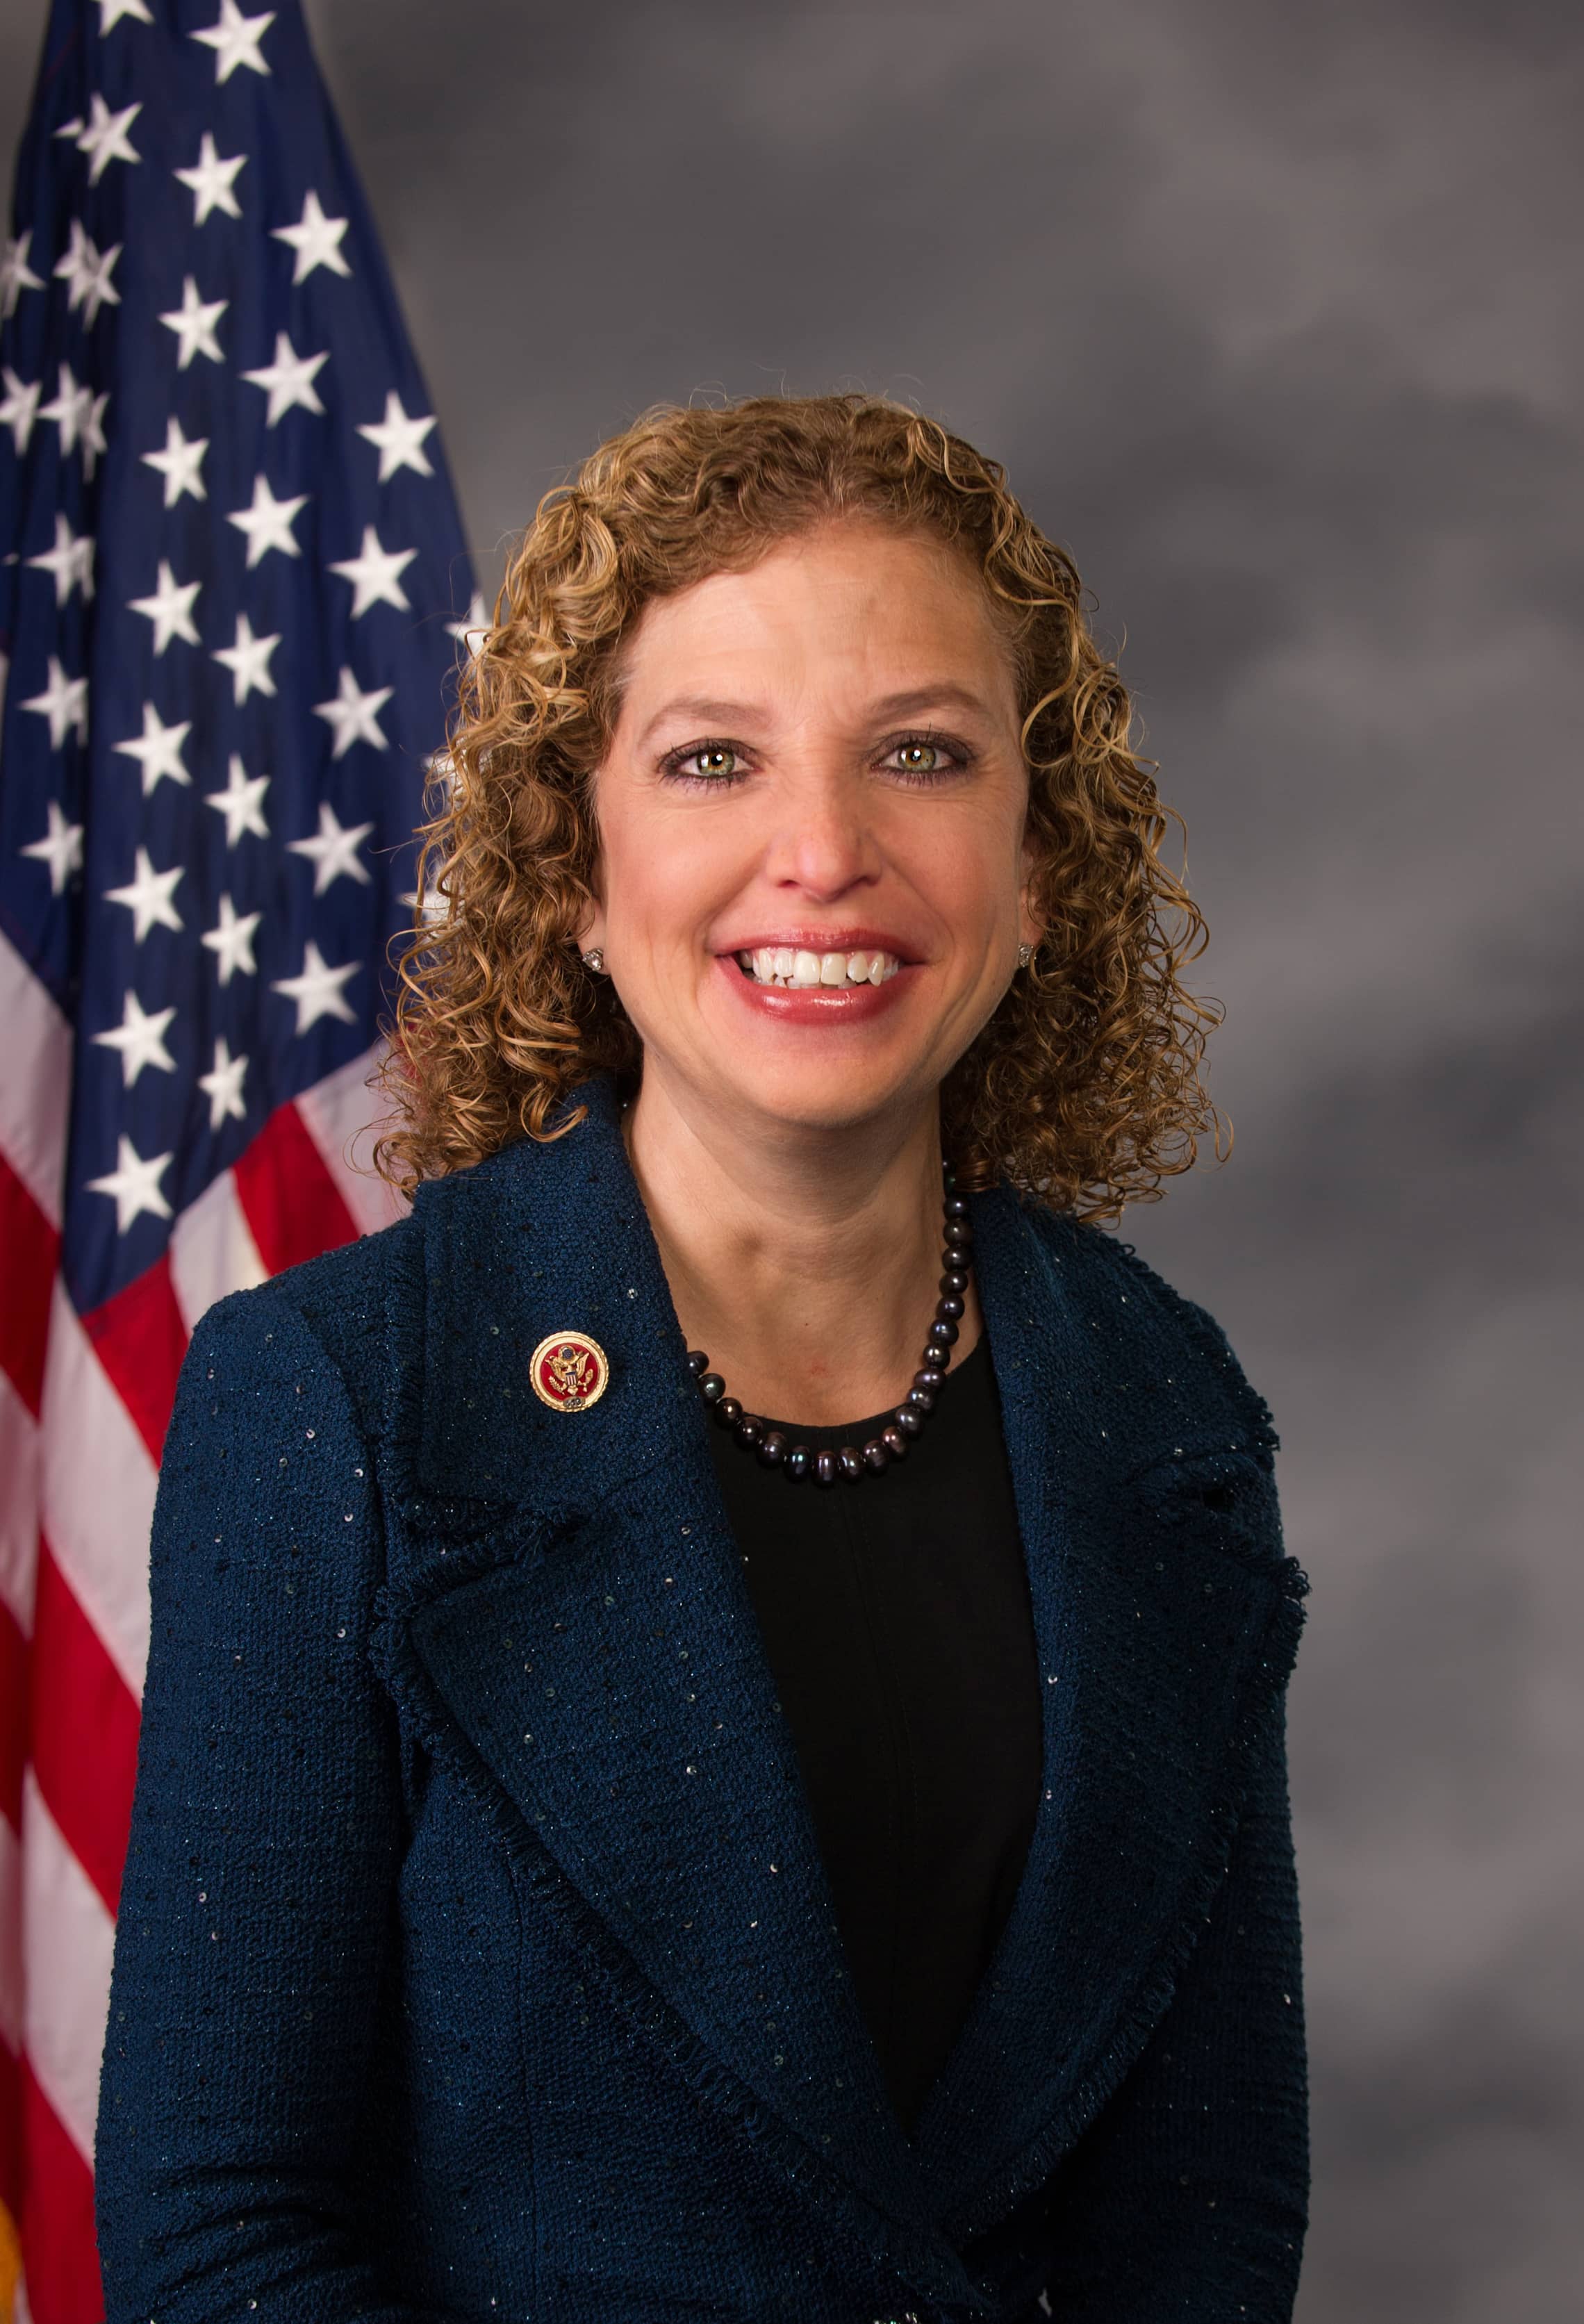 Image of Debbie Wasserman Schultz, U.S. House of Representatives, Democratic Party